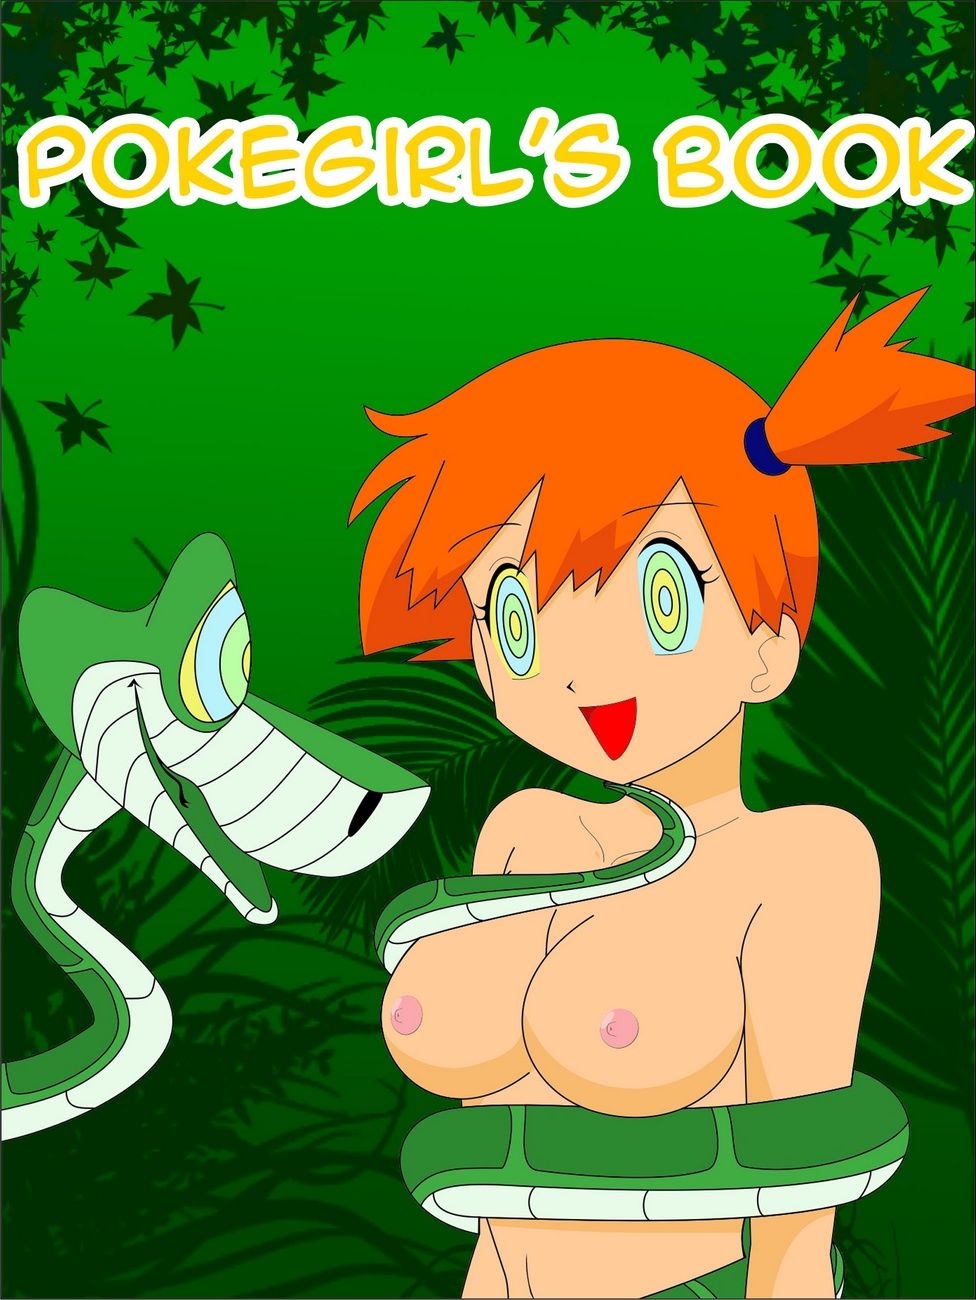 Pokegirl's Book page 1